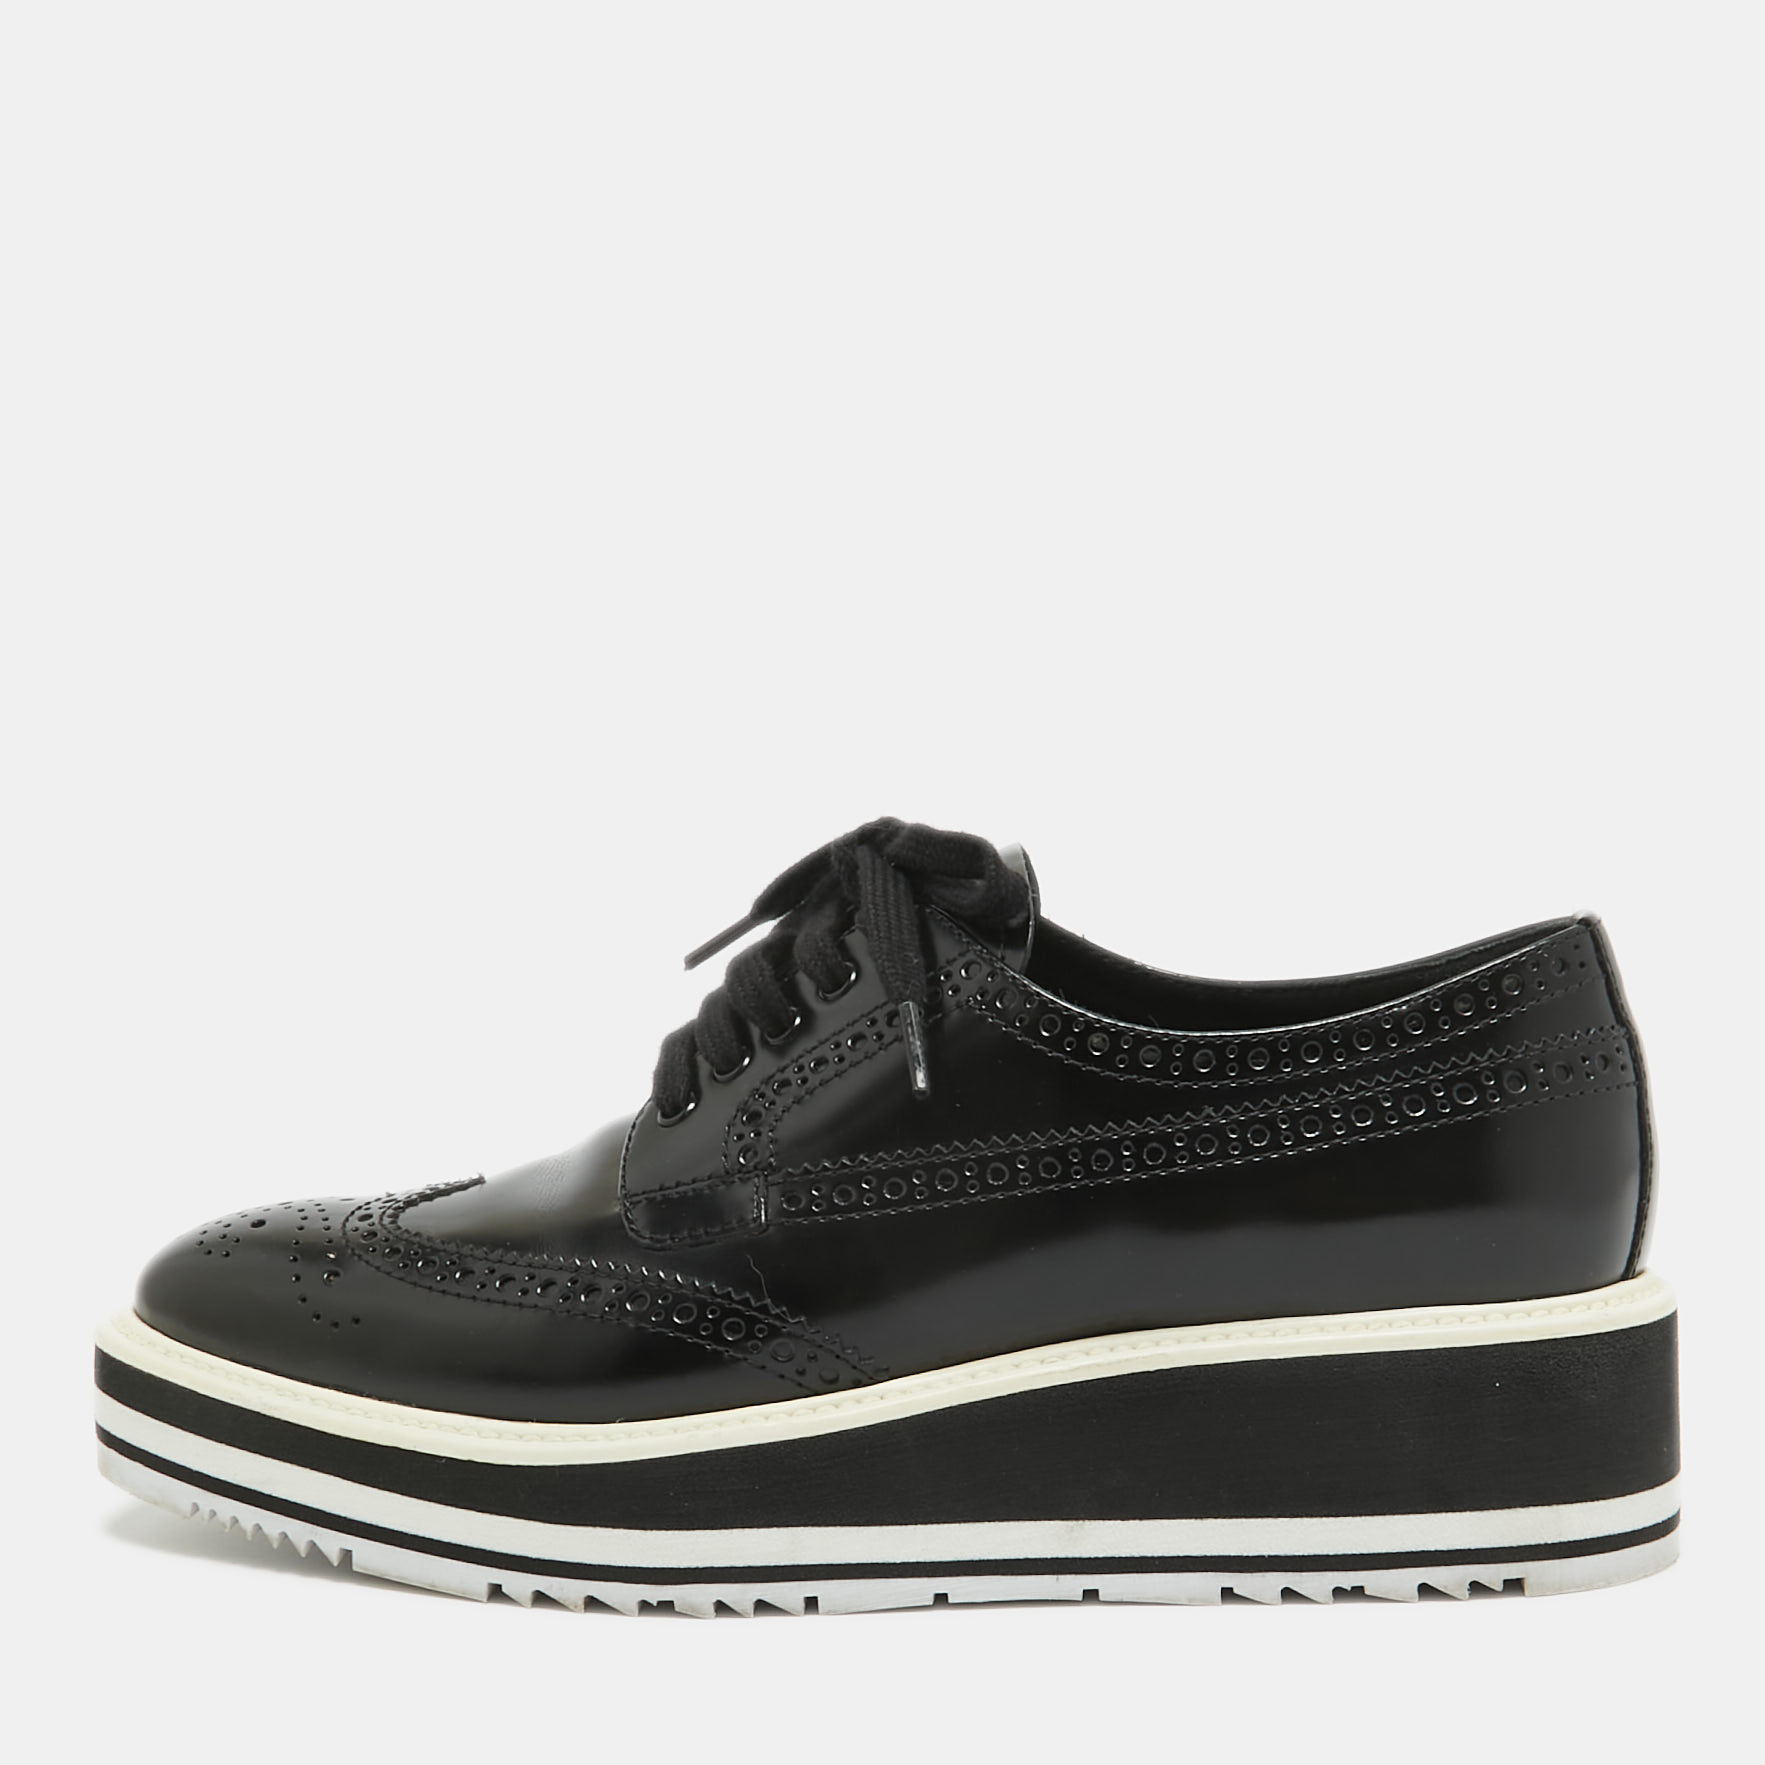 Prada black brogue patent leather platform derby sneakers size 37.5